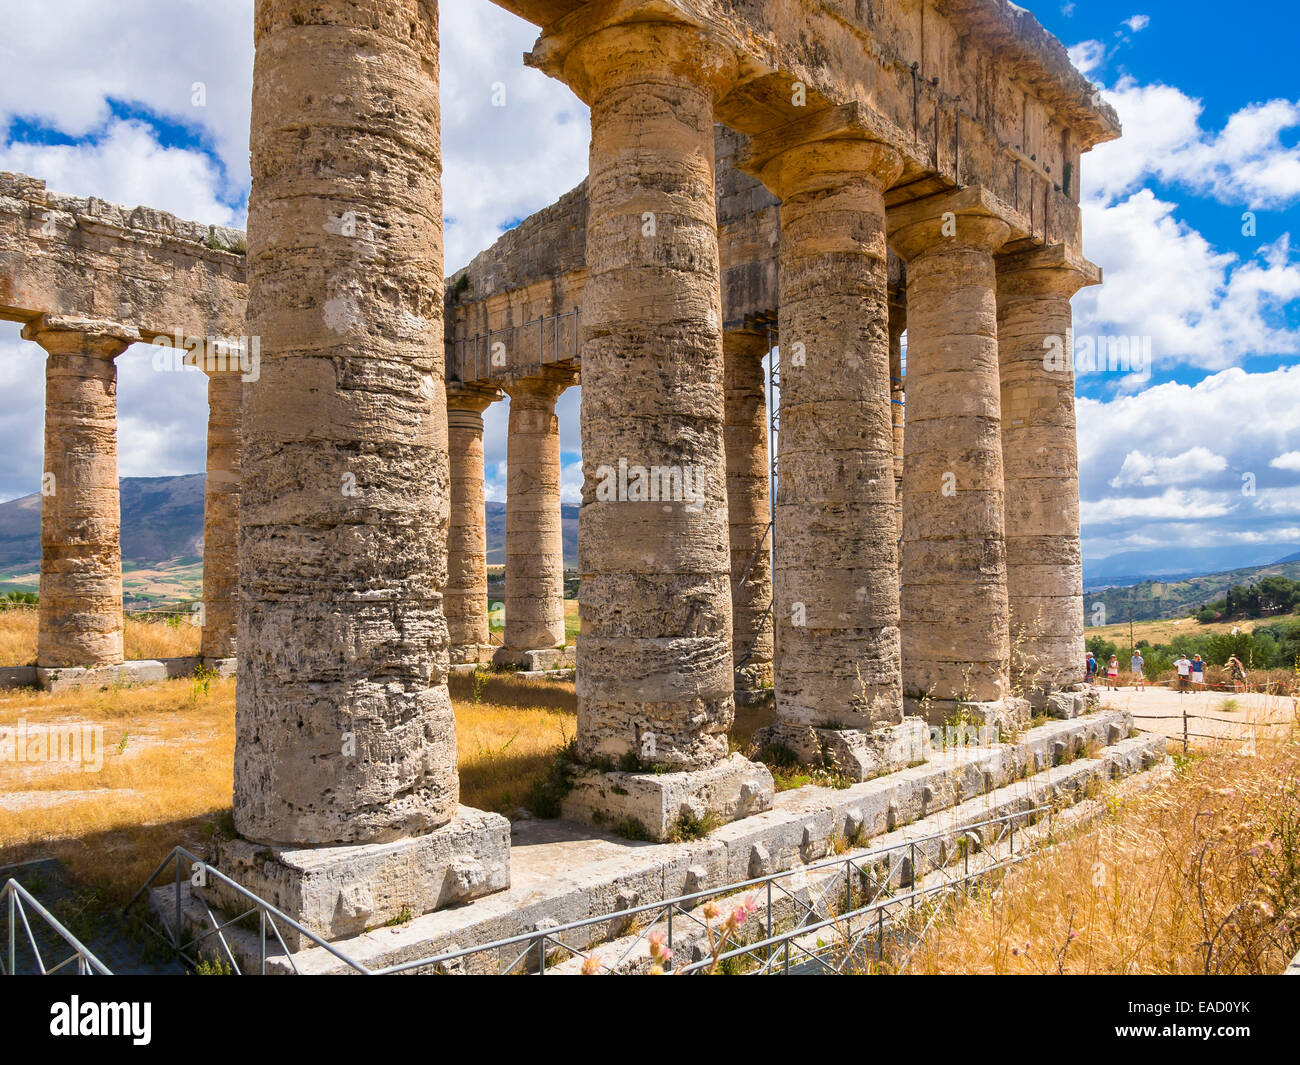 Columns of the Doric temple of the Elymians of Segesta, Calatafimi, Province of Trapani, Sicily, Italy Stock Photo